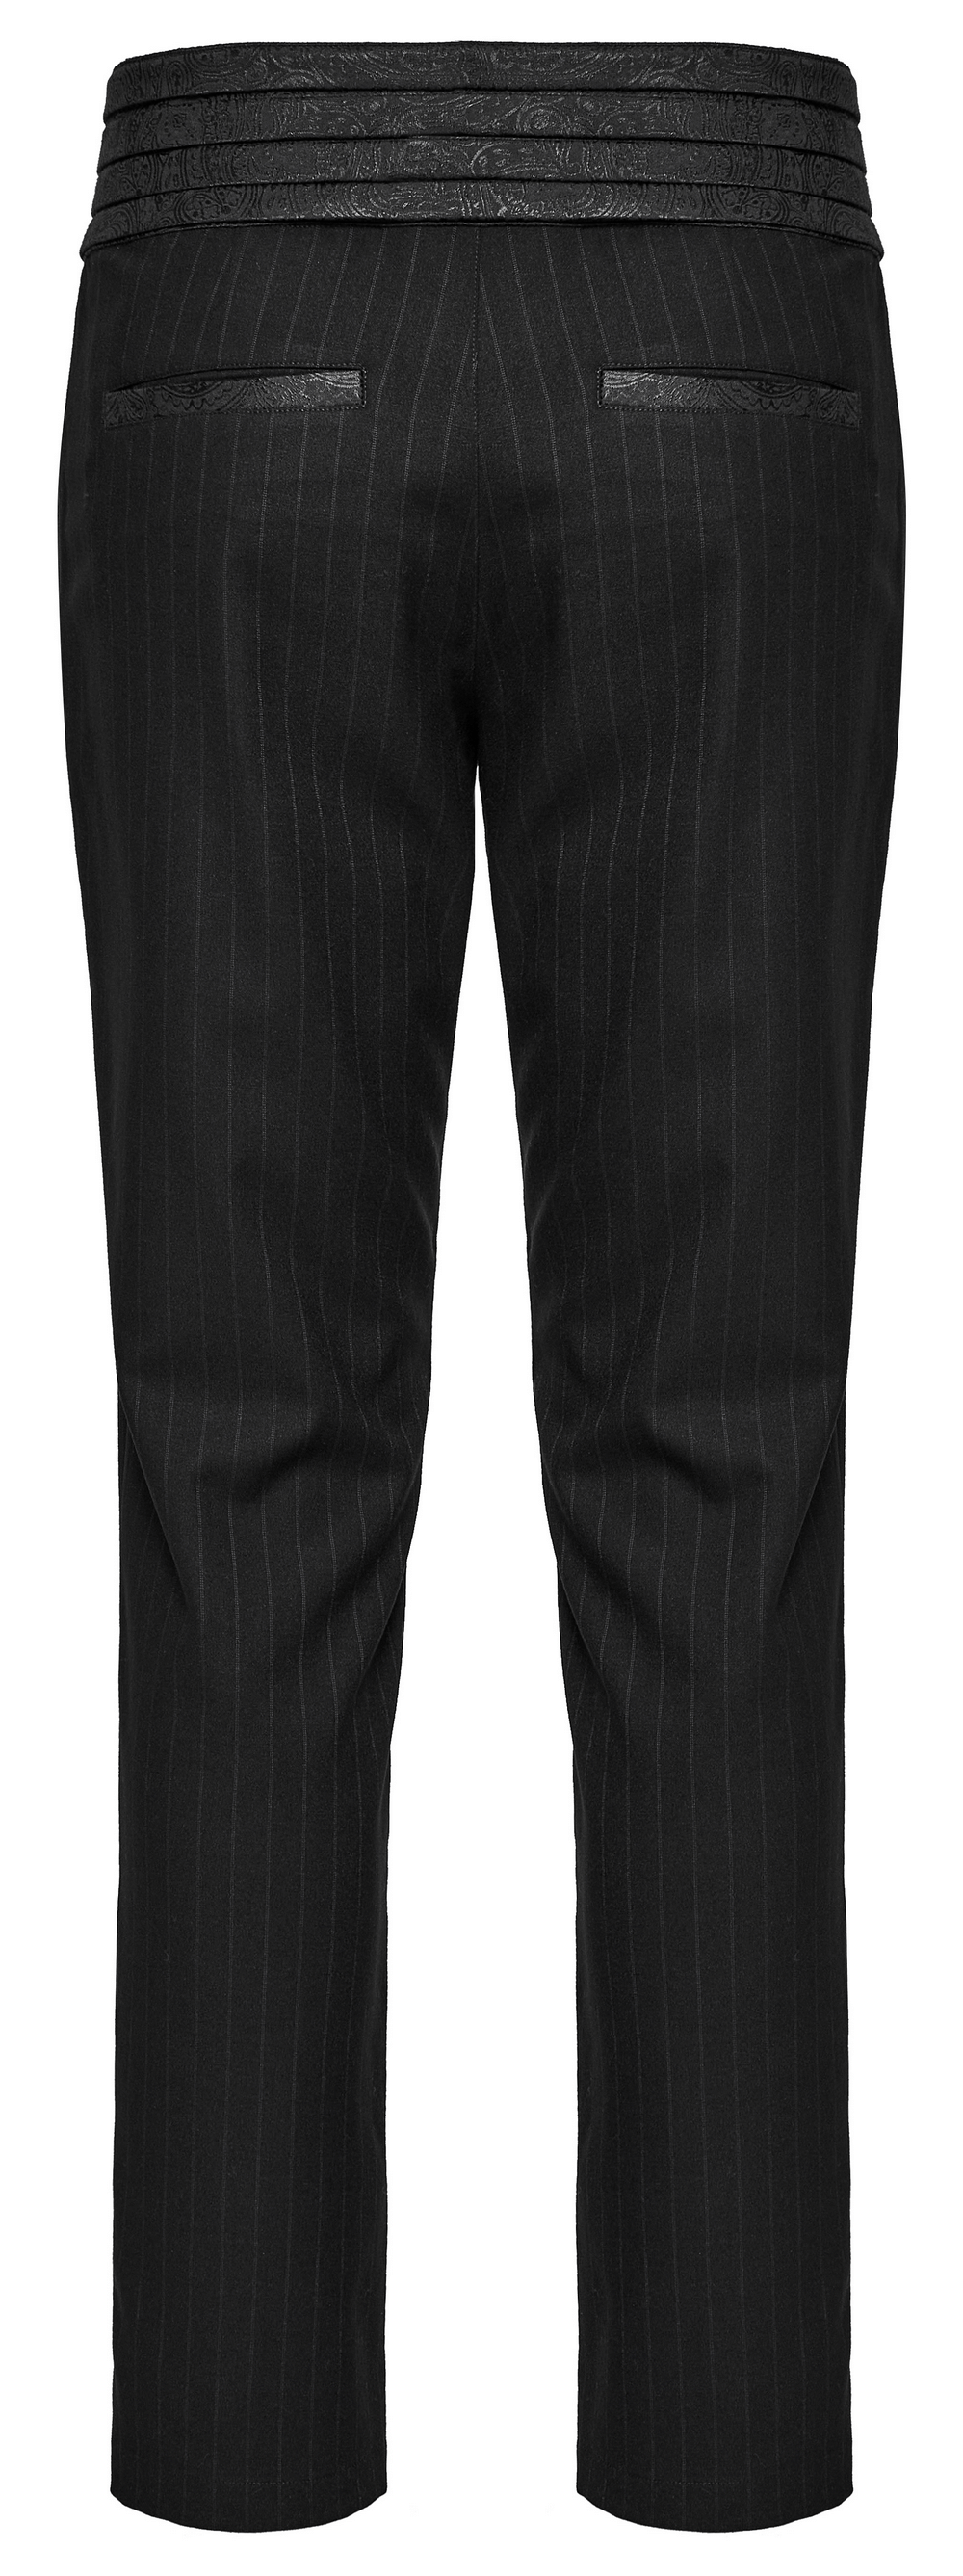 Gentleman Black Striped Pants with Elegant Belt